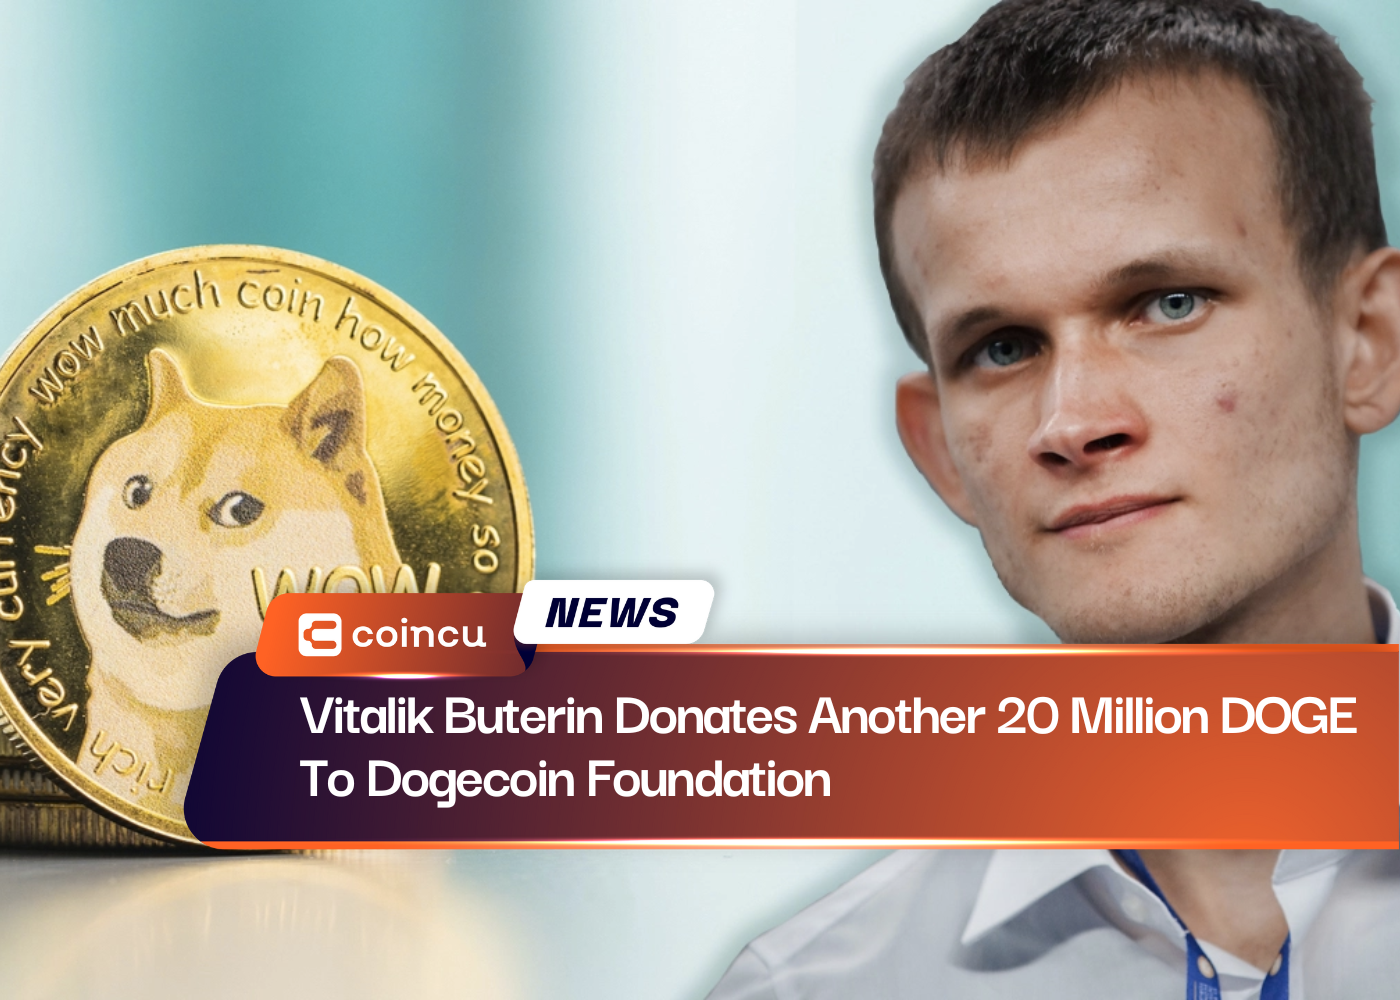 Vitalik Buterin Donates Another 20 Million DOGE To Dogecoin Foundation